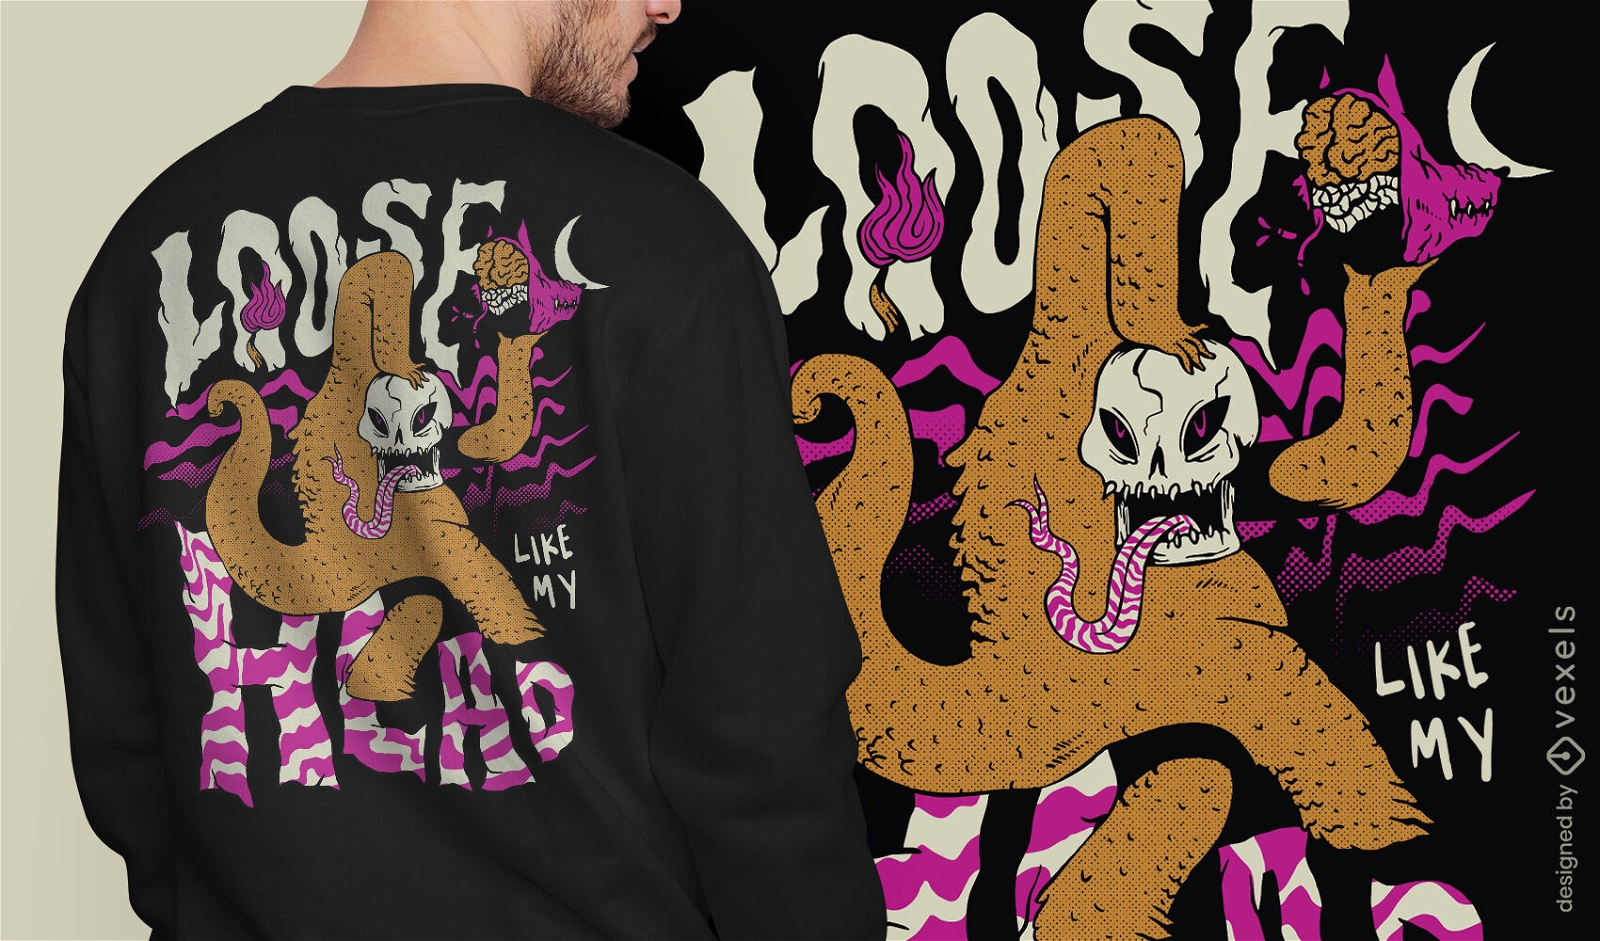 Loose tongue monster skull t-shirt design